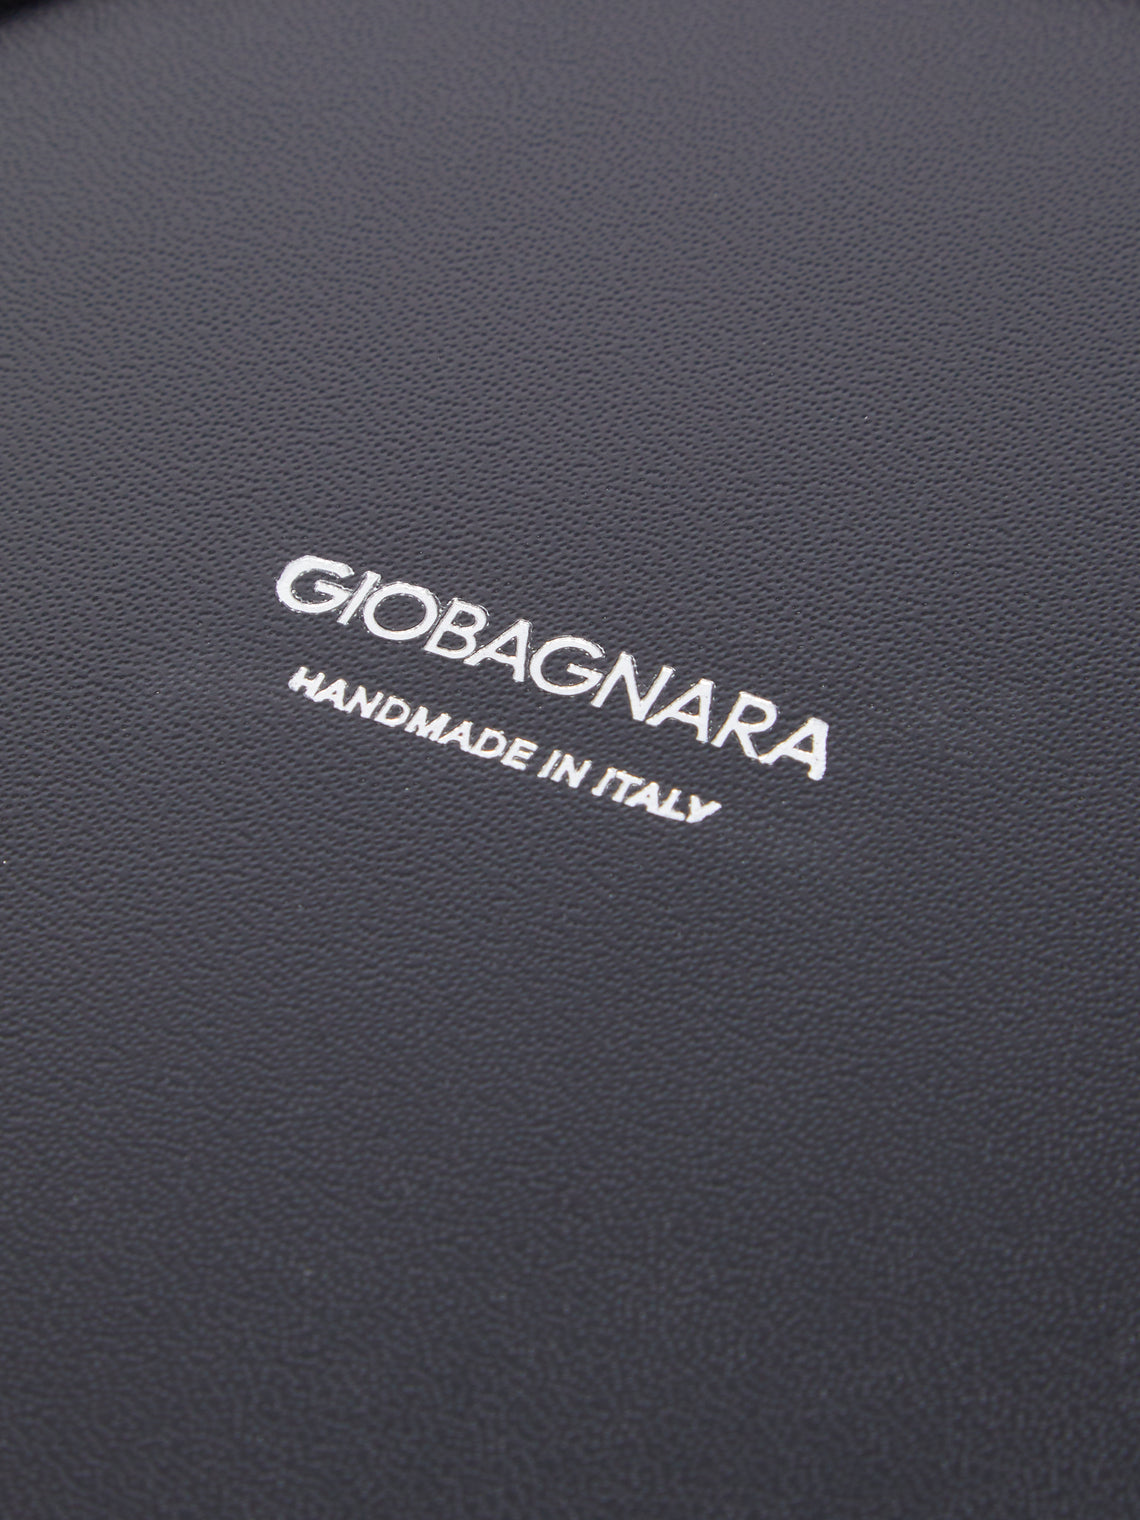 Giobagnara - Leather Swing Round Bin -  - ABASK